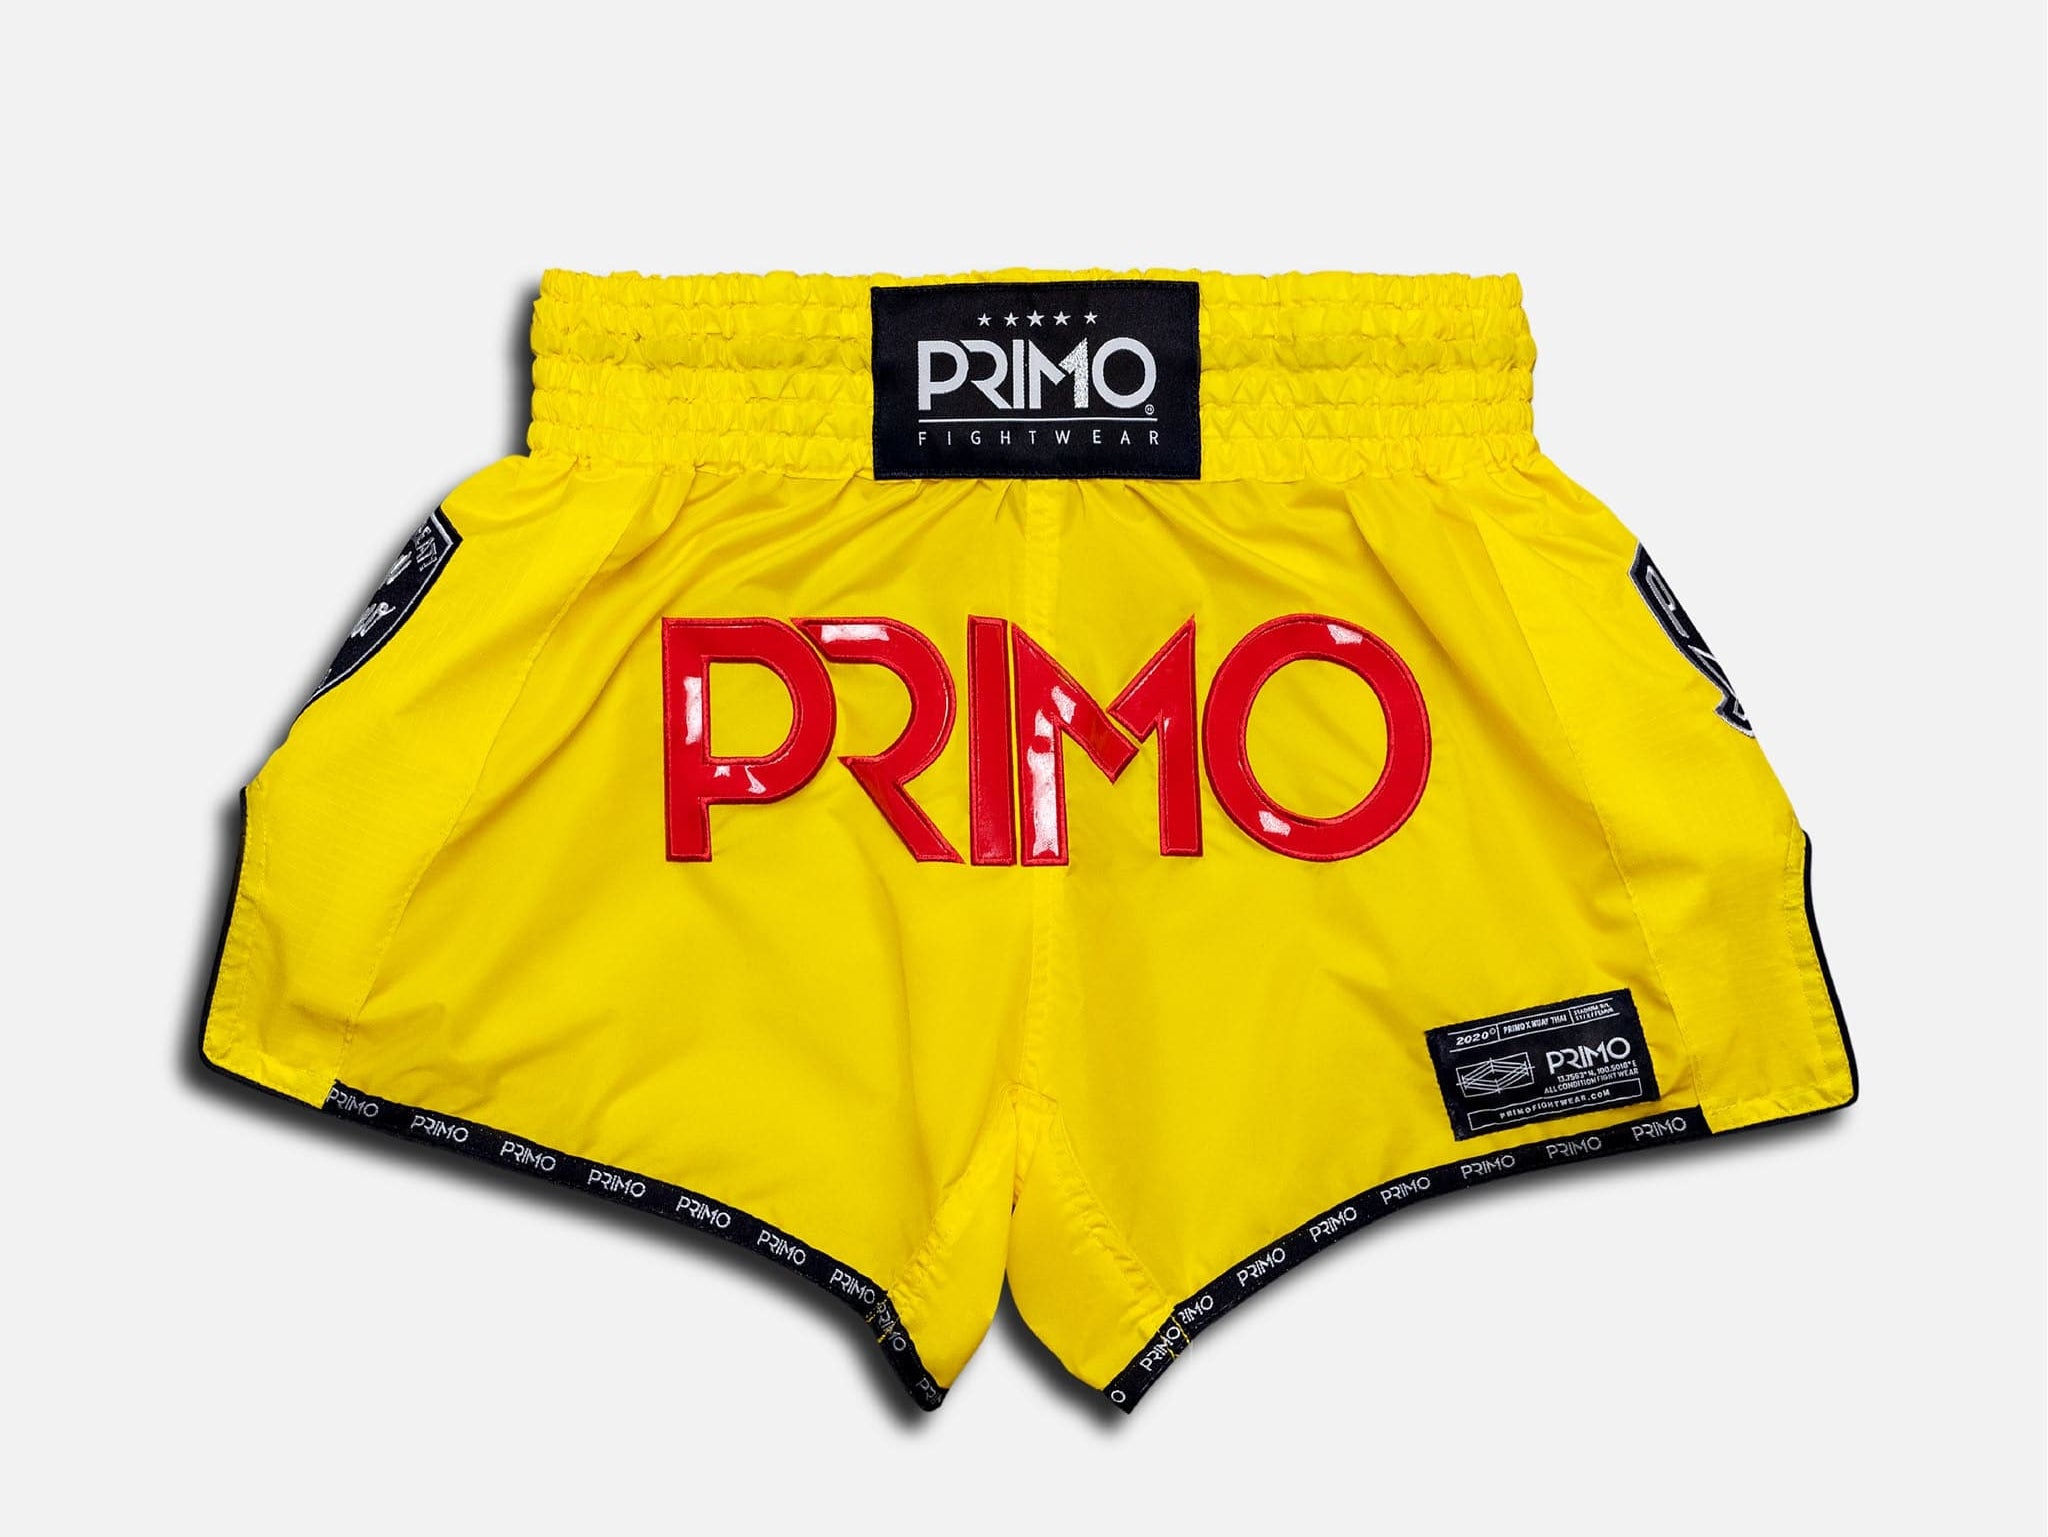 Primo Fight Wear Official Muay Thai Shorts - Super Nylon - Yellow Stadium Classic